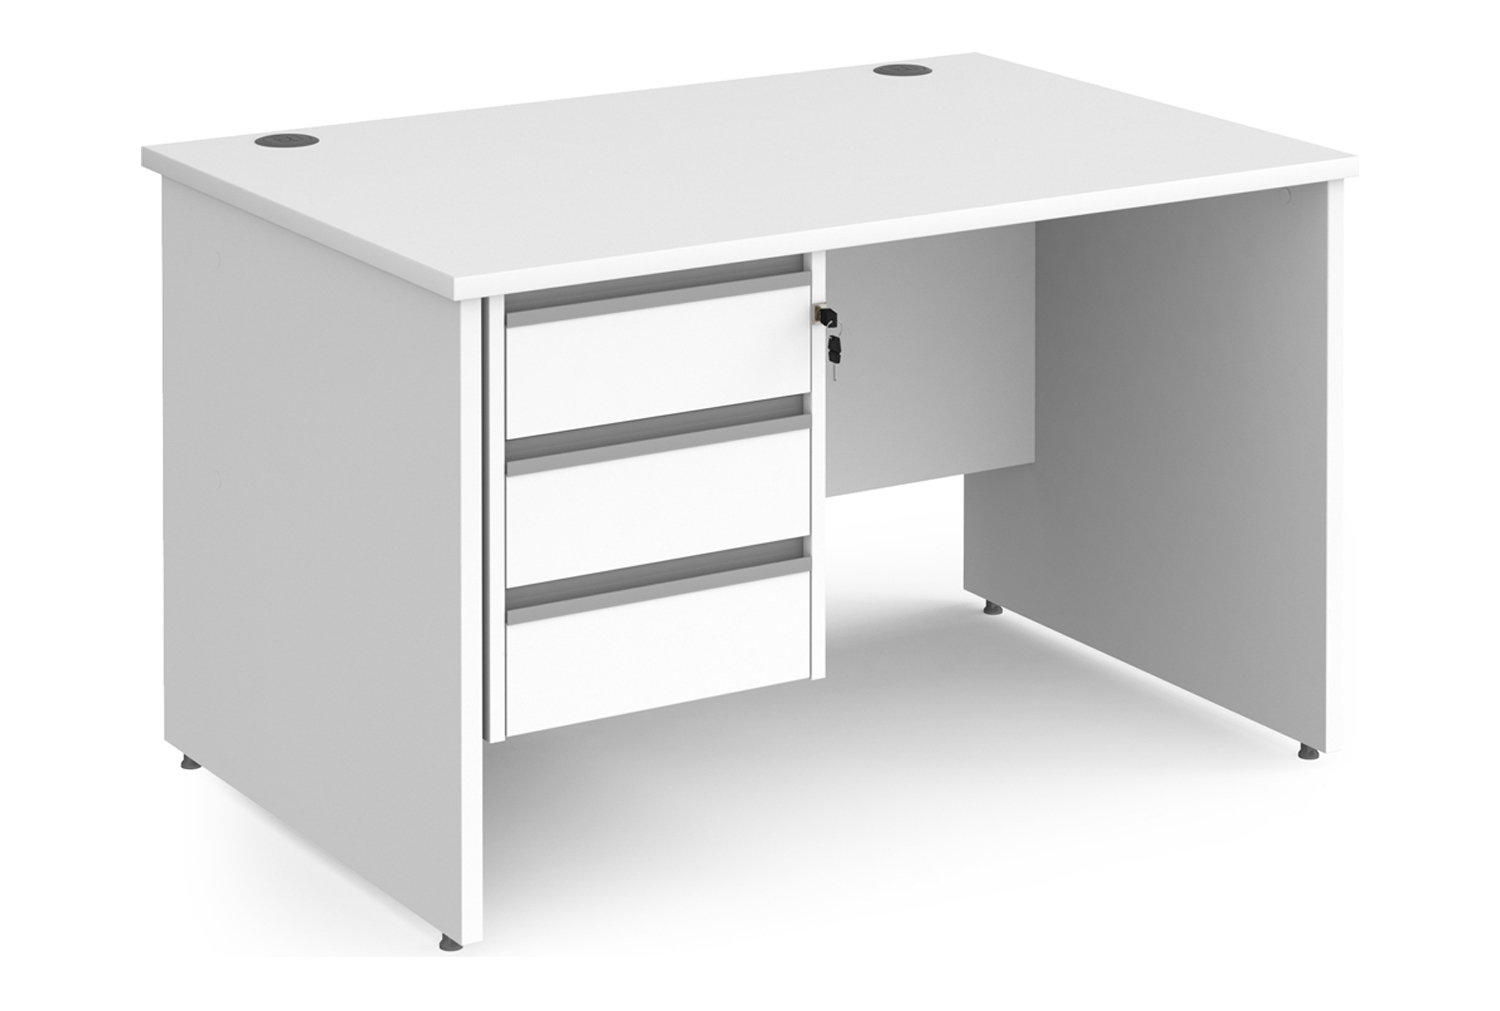 Value Line Classic+ Panel End Office Desk 3 Drawers (Silver Slats), 120wx80dx73h (cm), White